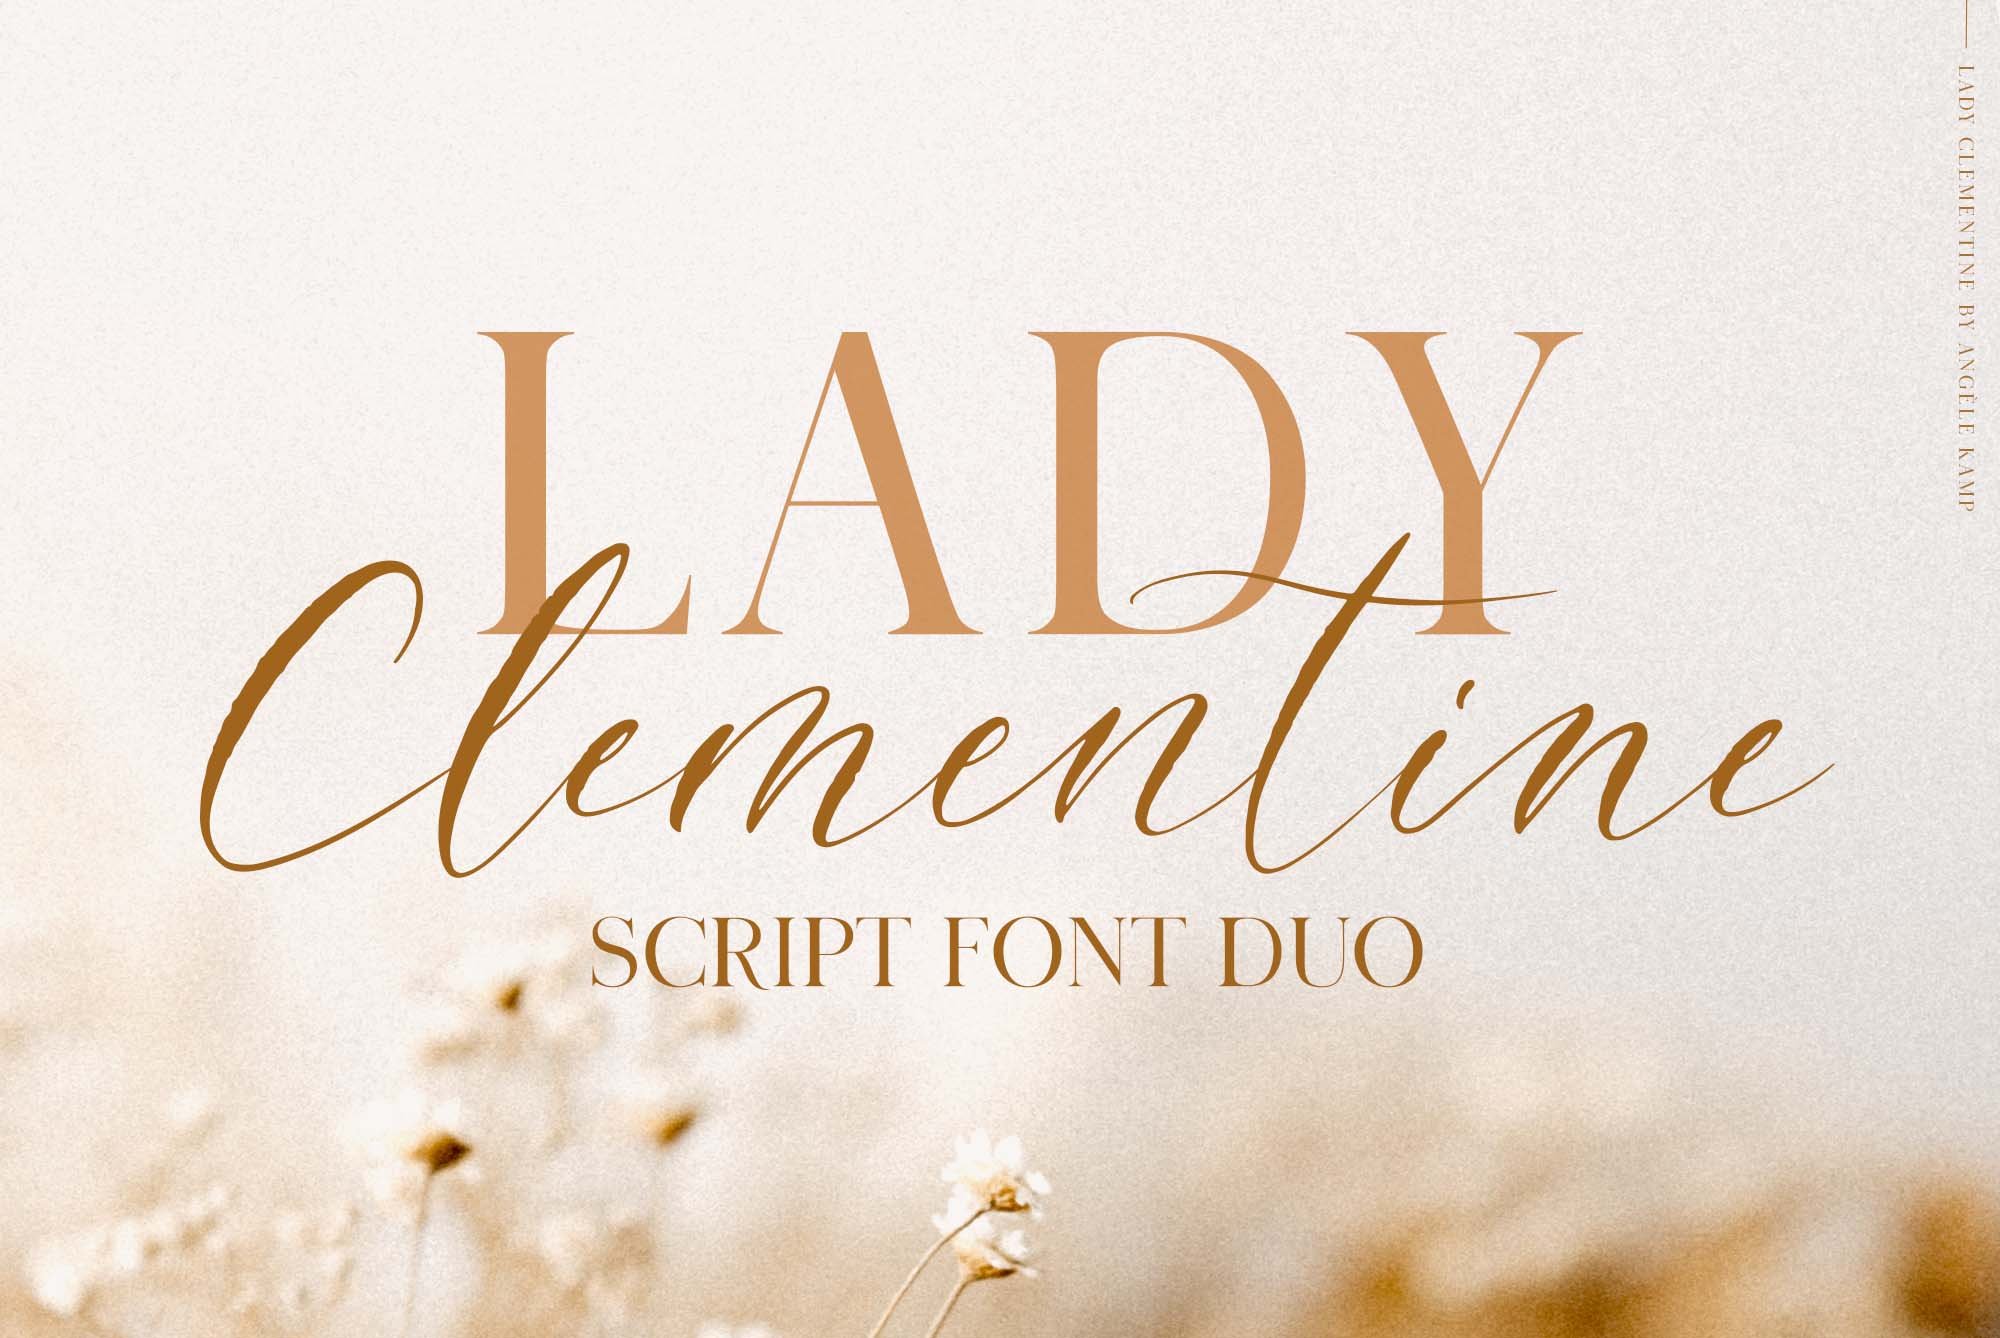 Lady Clementine script font & serif cover image.